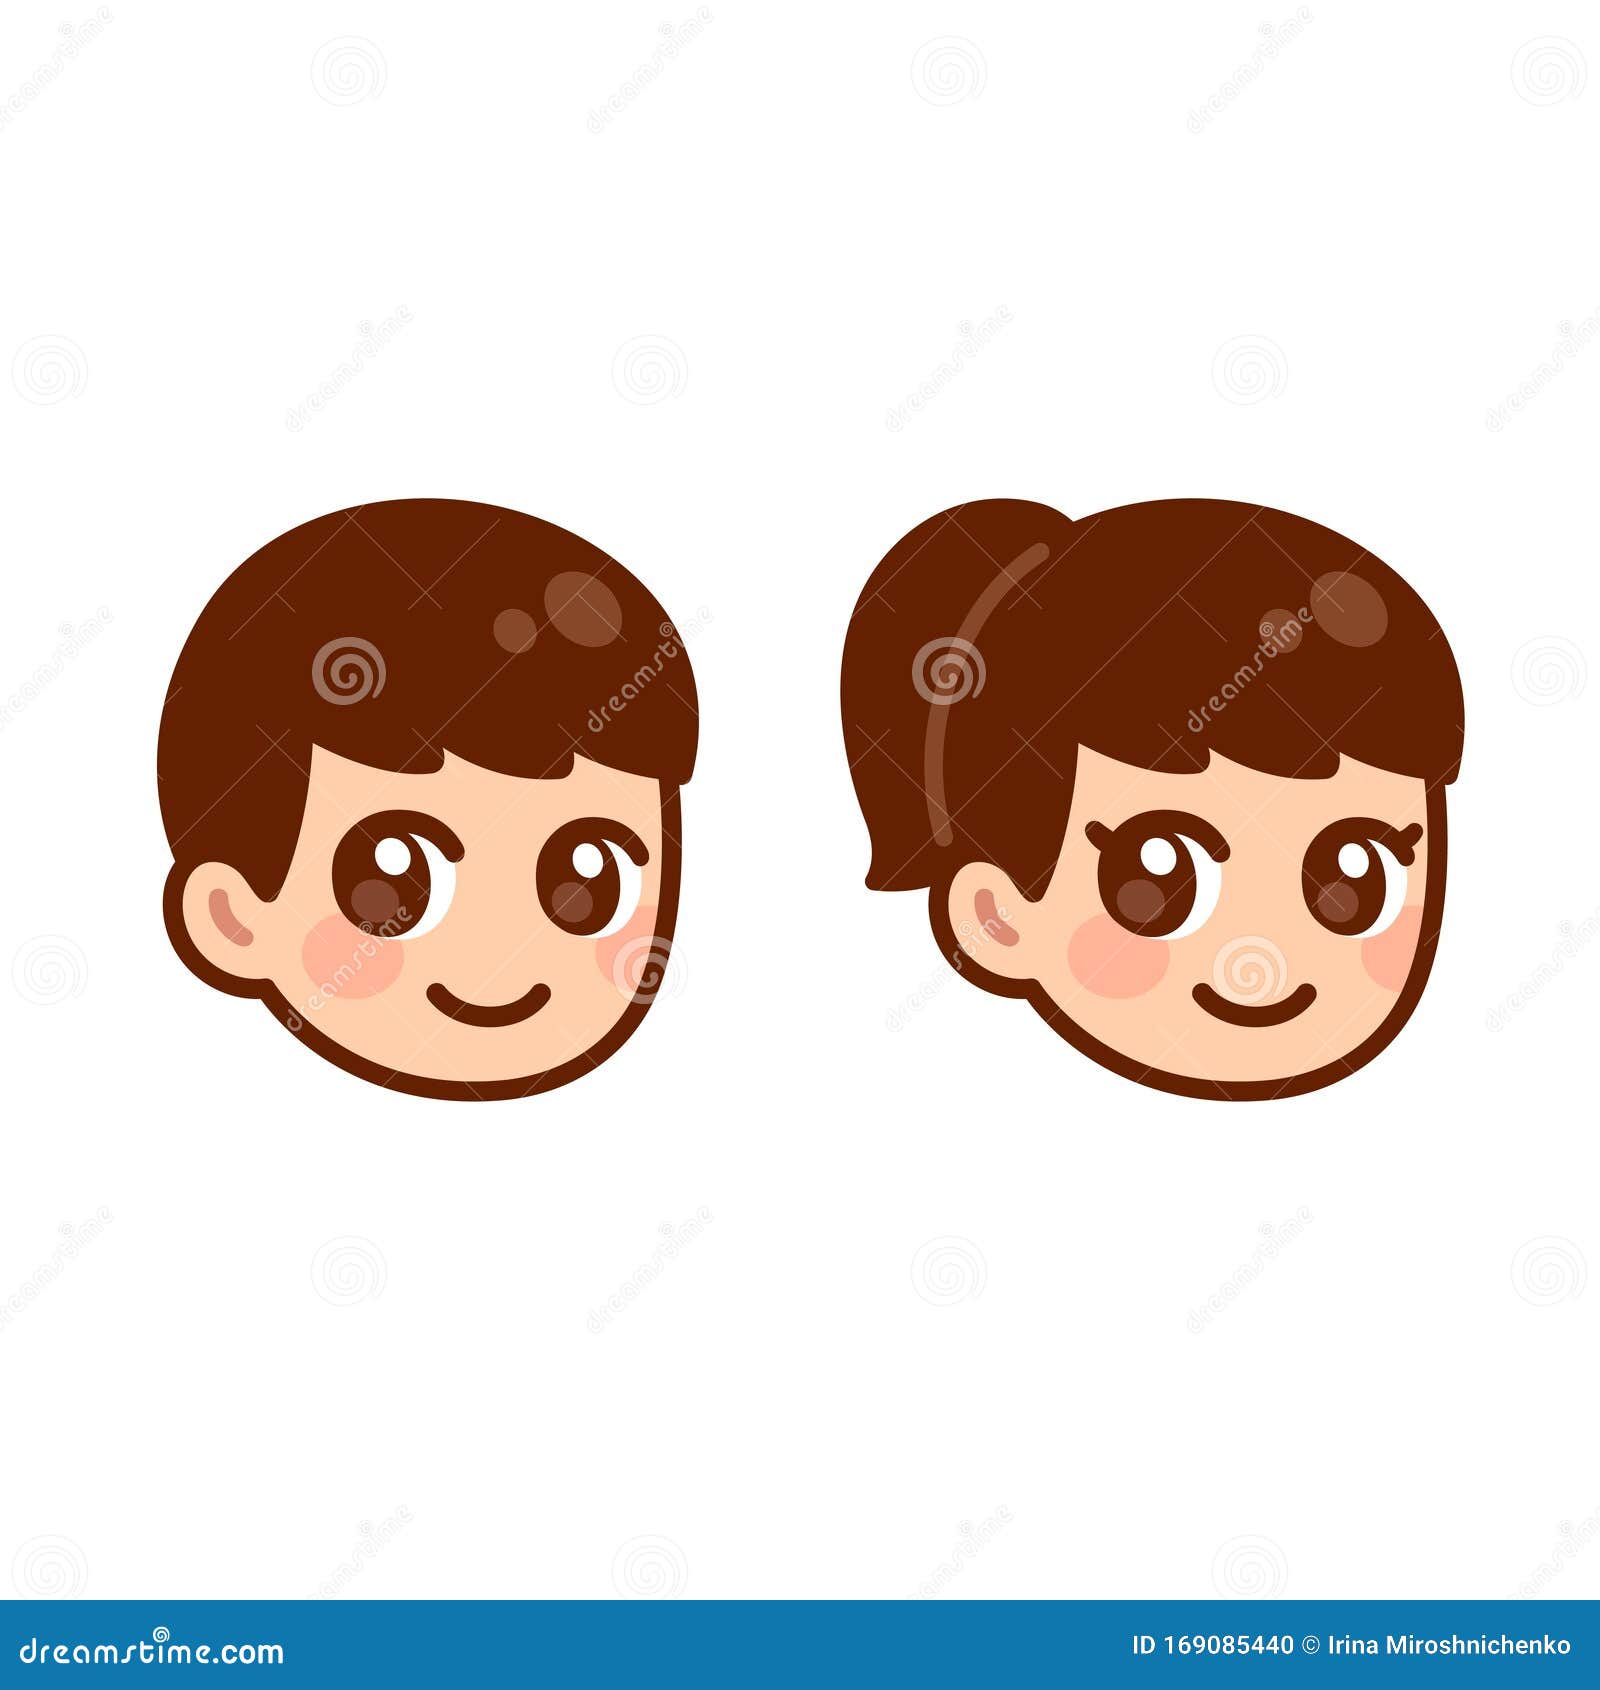 Cute anime boy and girl stock vector. Illustration of cartoon - 169085440